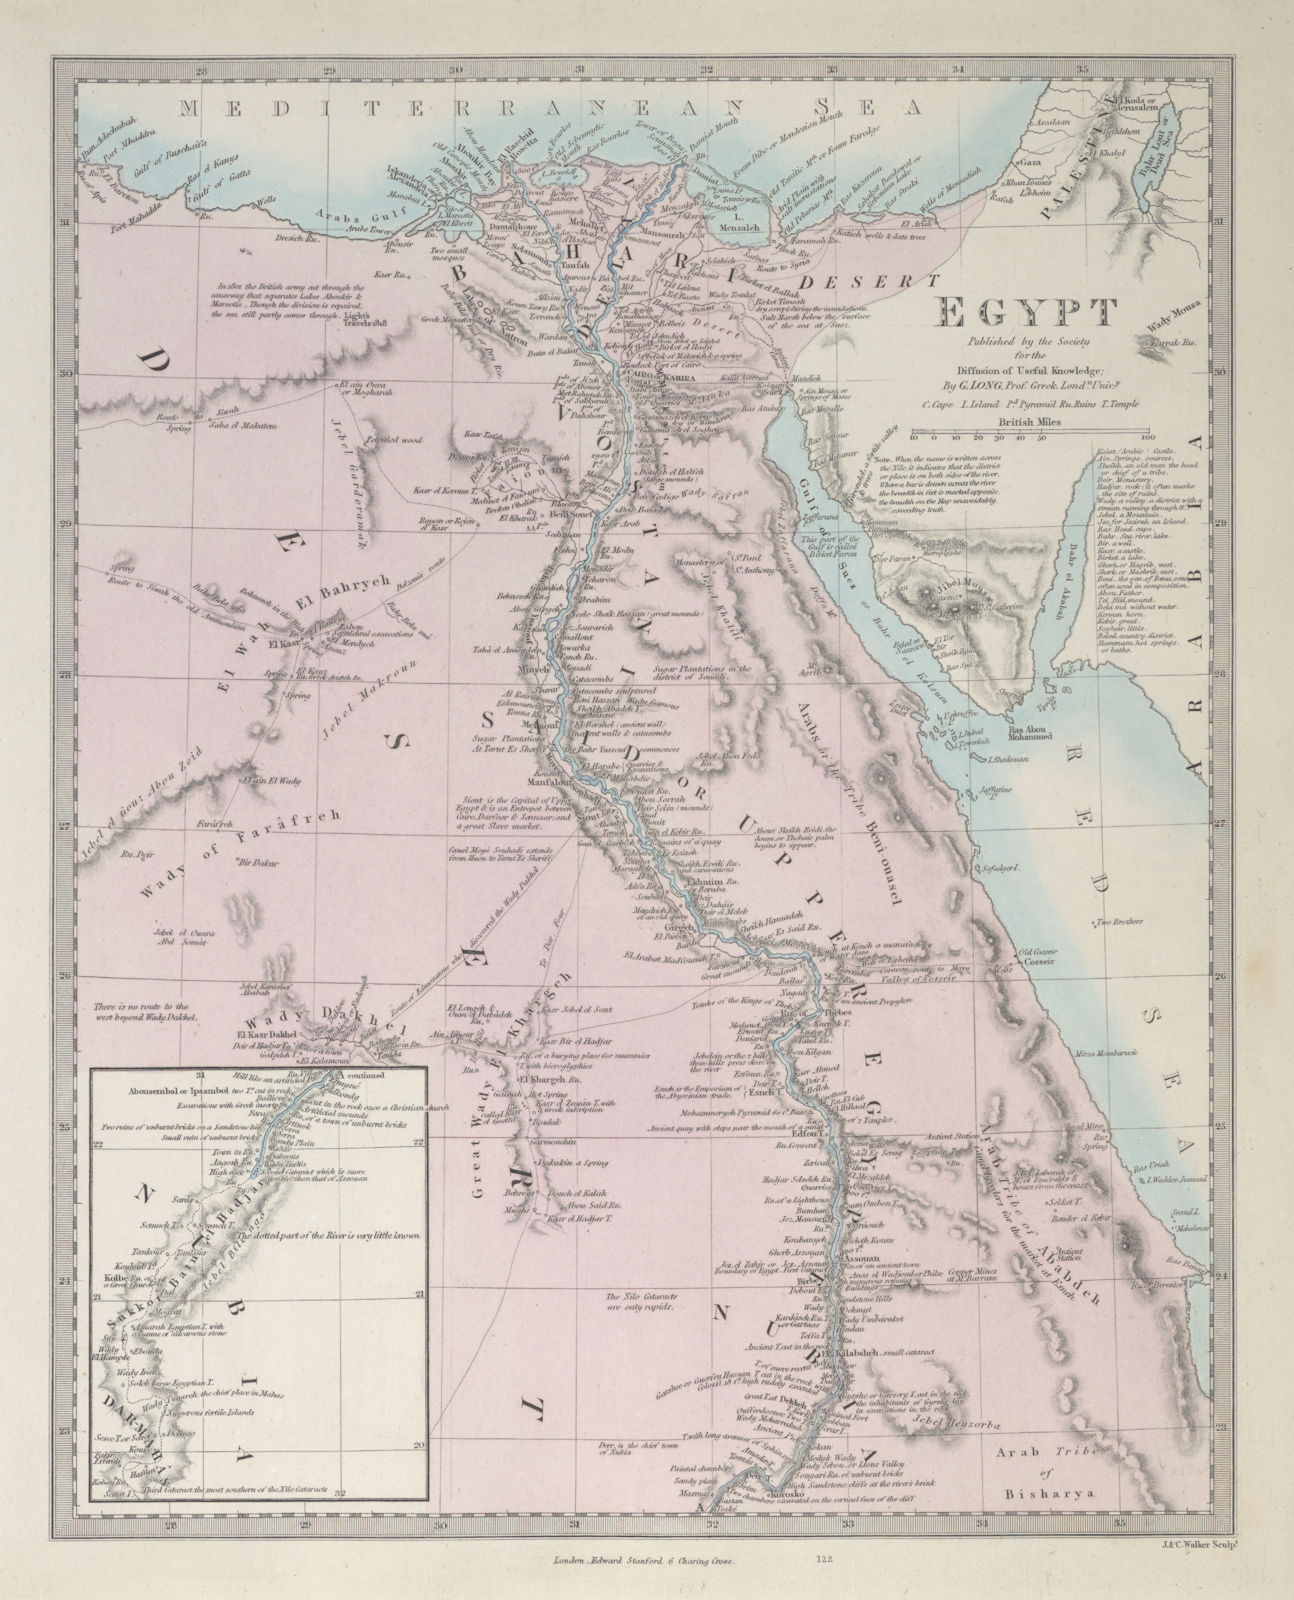 EGYPT. Nile valley. Ancient sites. Original outline colour. SDUK 1857 old map